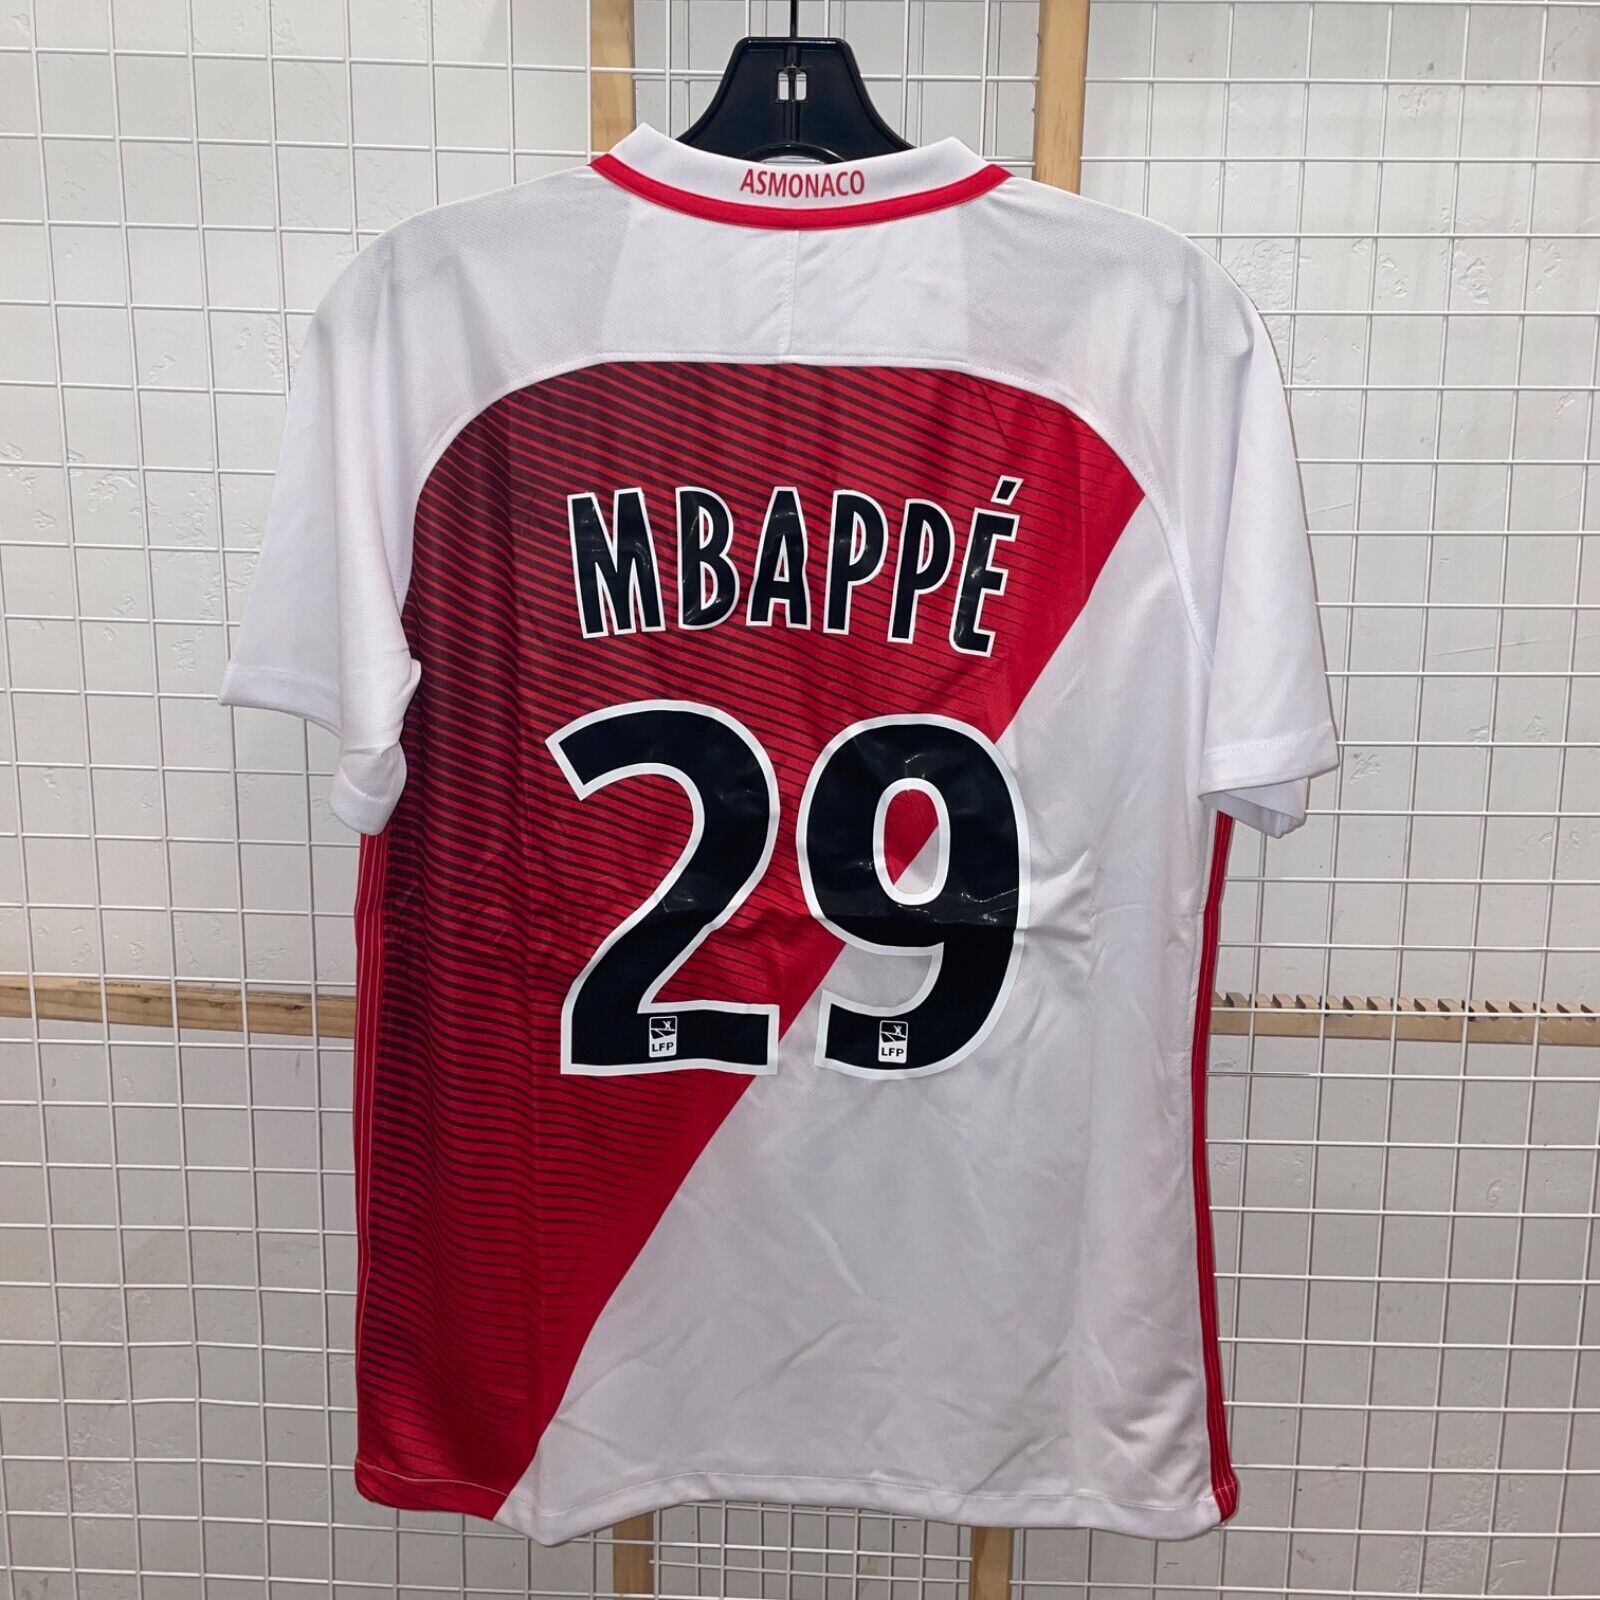 AS Monaco 2016-17 Kylian Mbappé France Home Football Soccer Mens Shirt Jersey